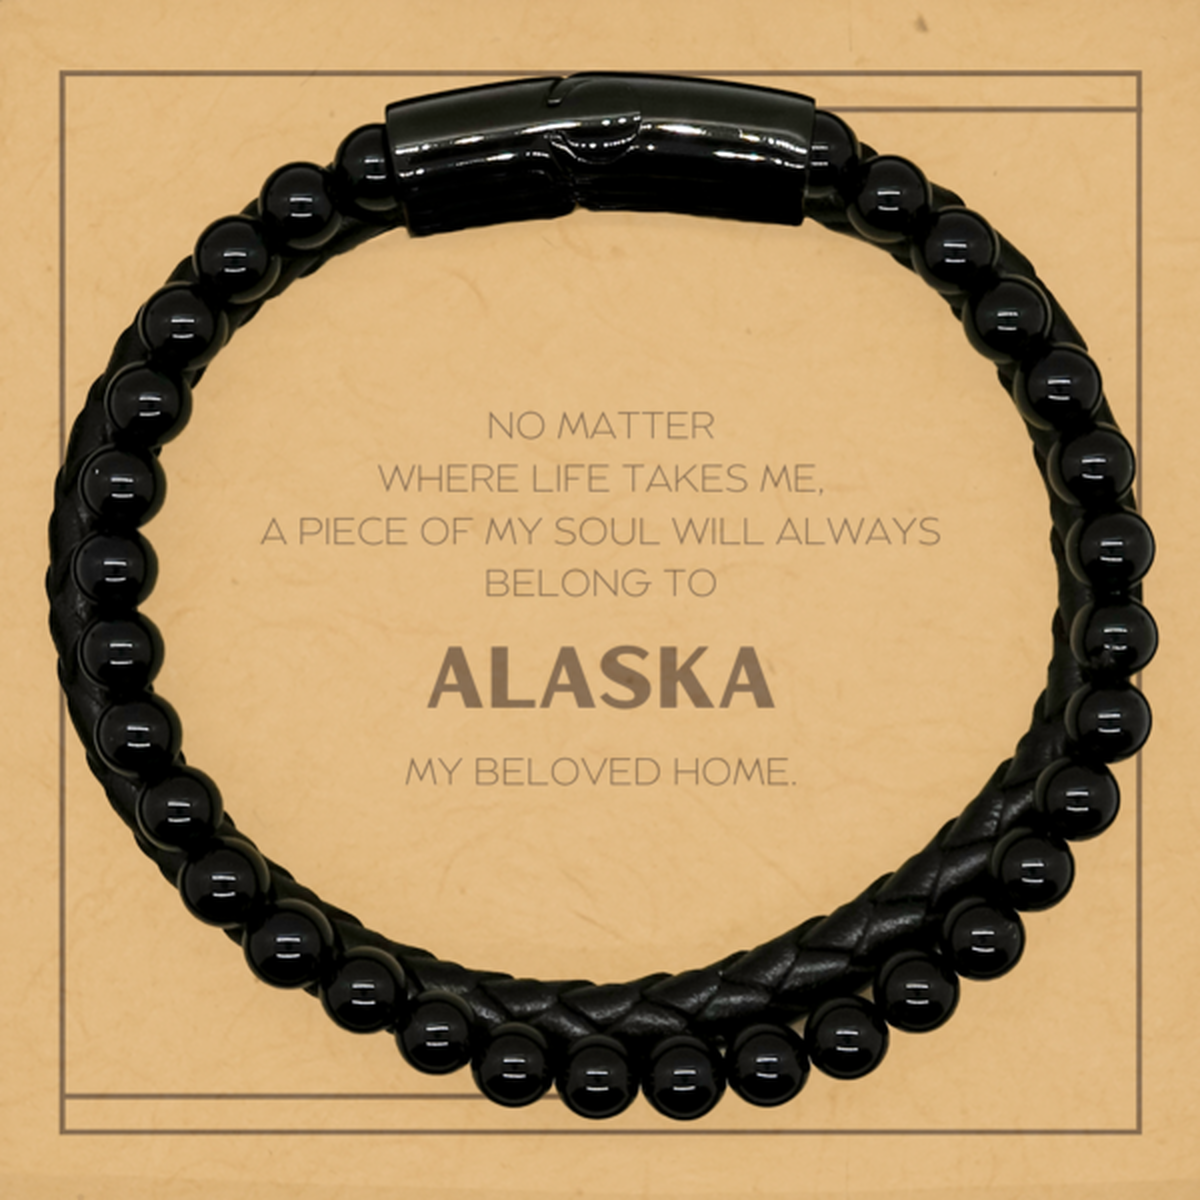 Love Alaska State Gifts, My soul will always belong to Alaska, Proud Stone Leather Bracelets, Birthday Unique Gifts For Alaska Men, Women, Friends